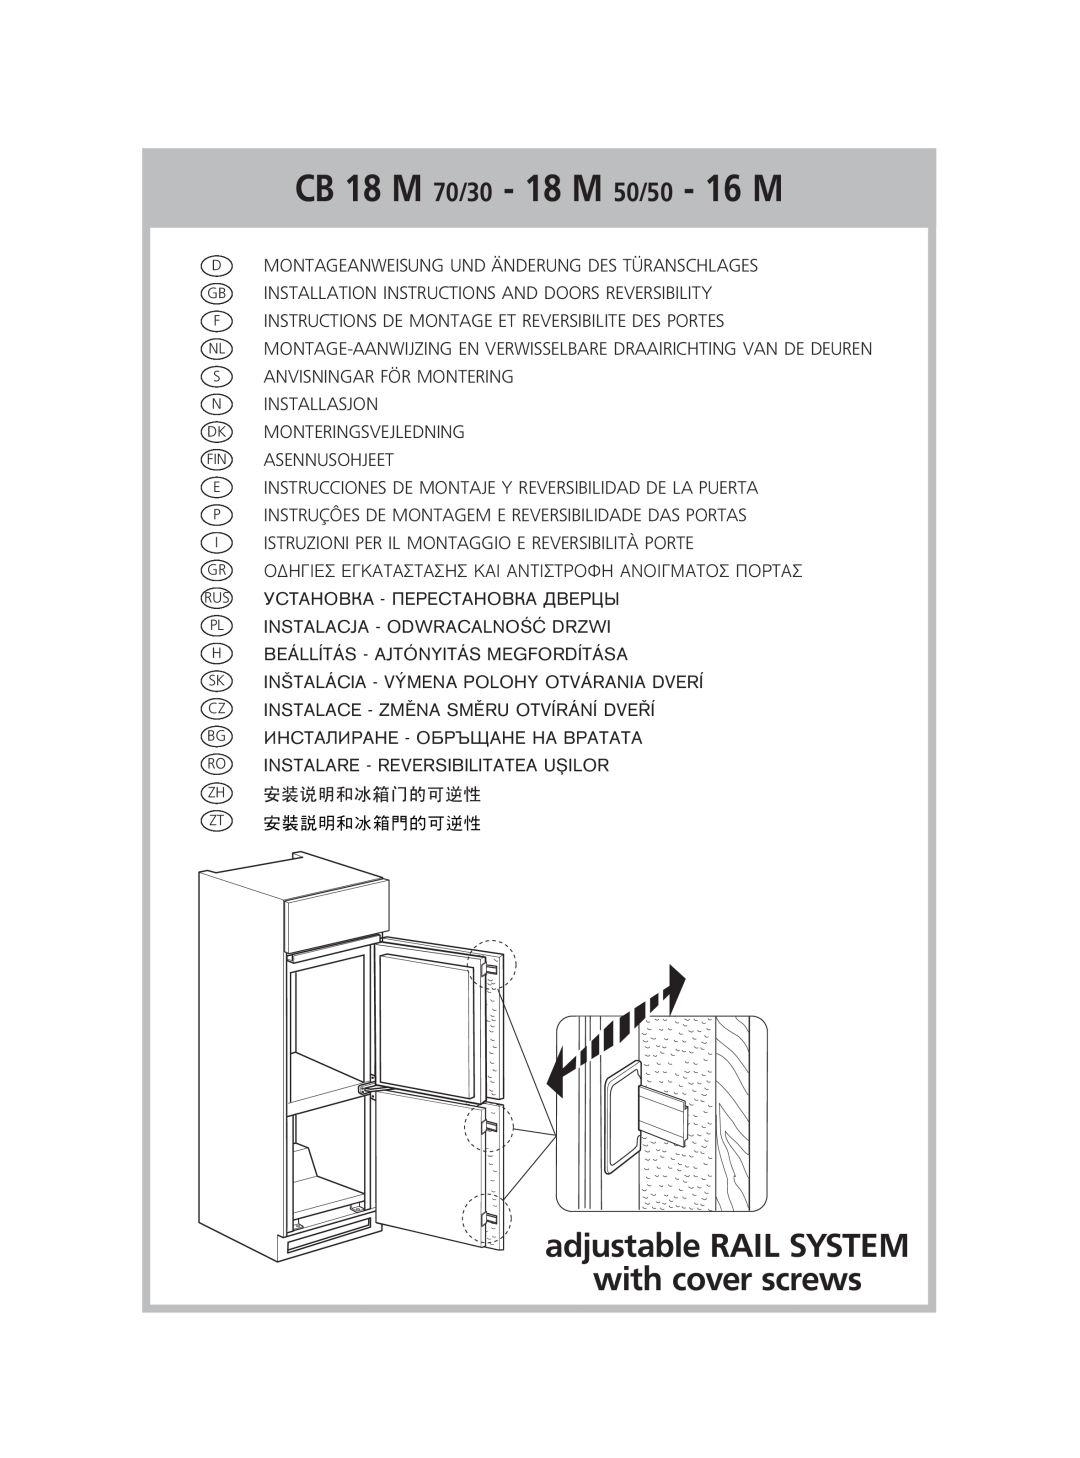 Smeg CR5050A manual adjustable RAIL SYSTEM with cover screws, CB 18 M 70/30 - 18 M 50/50 - 16 M 